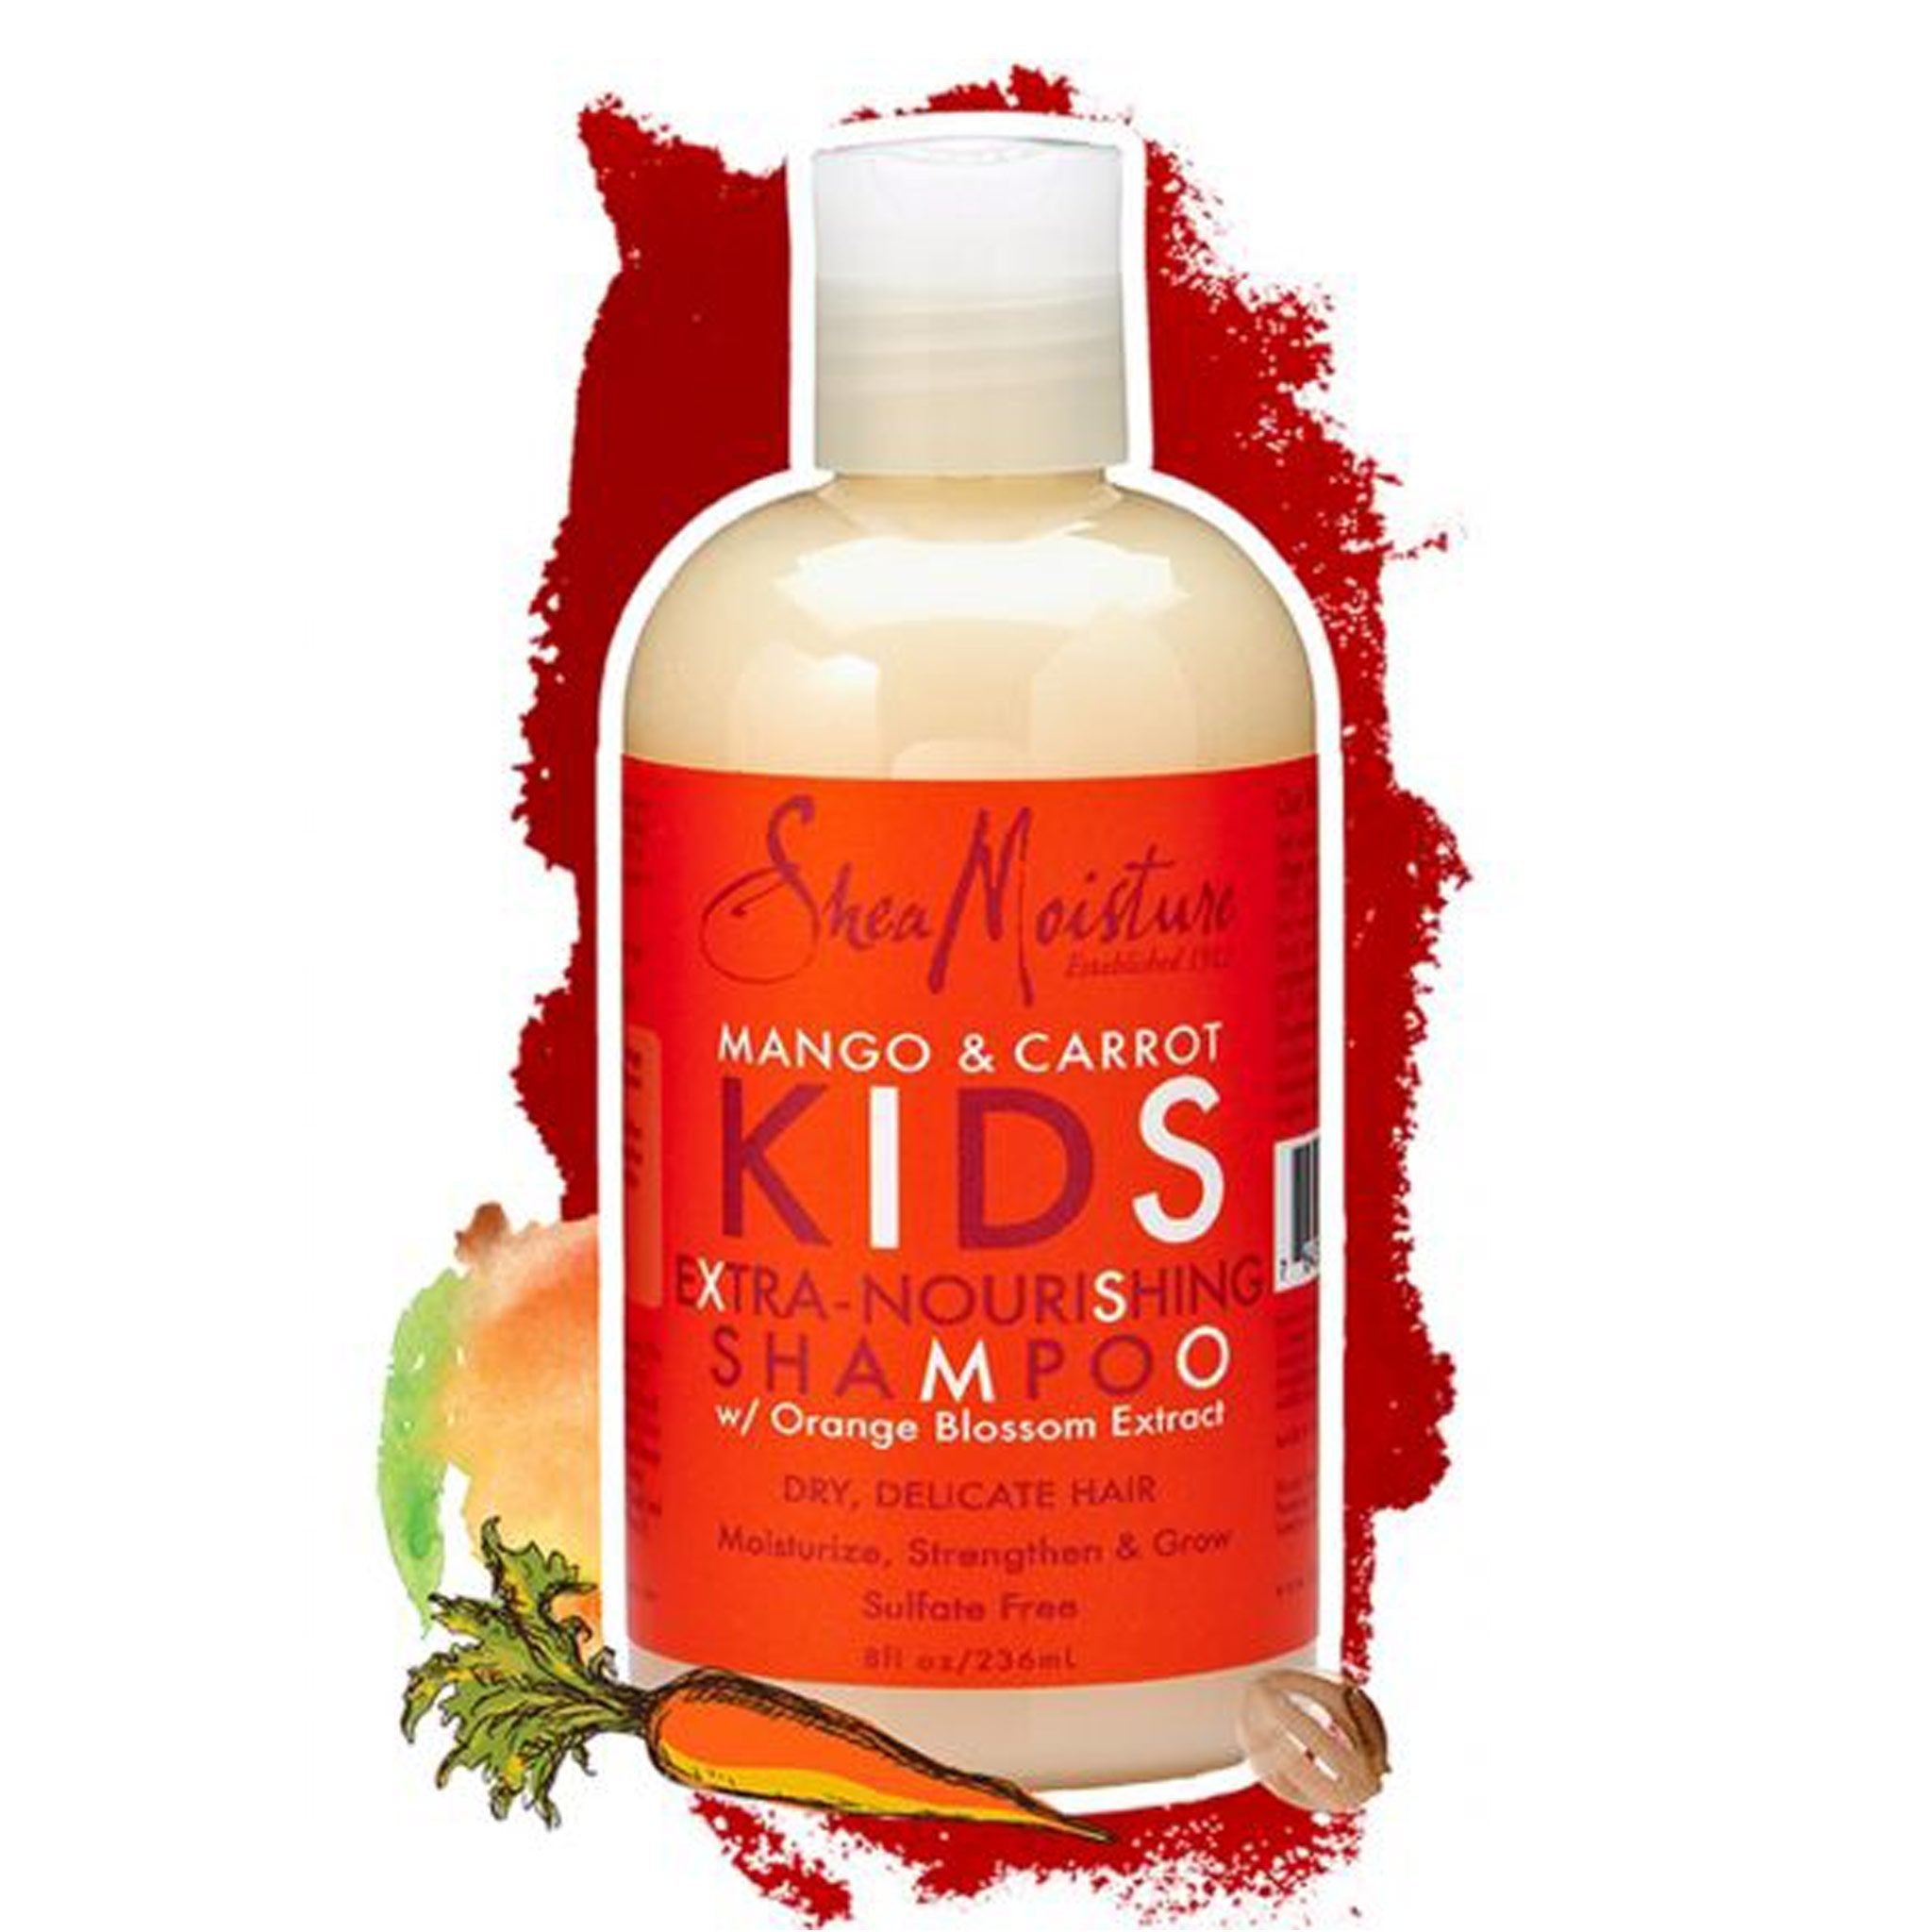 Shea Moisture KIDS | Mango & Carrot Extra-Nourishing Shampoo - lockenkopf